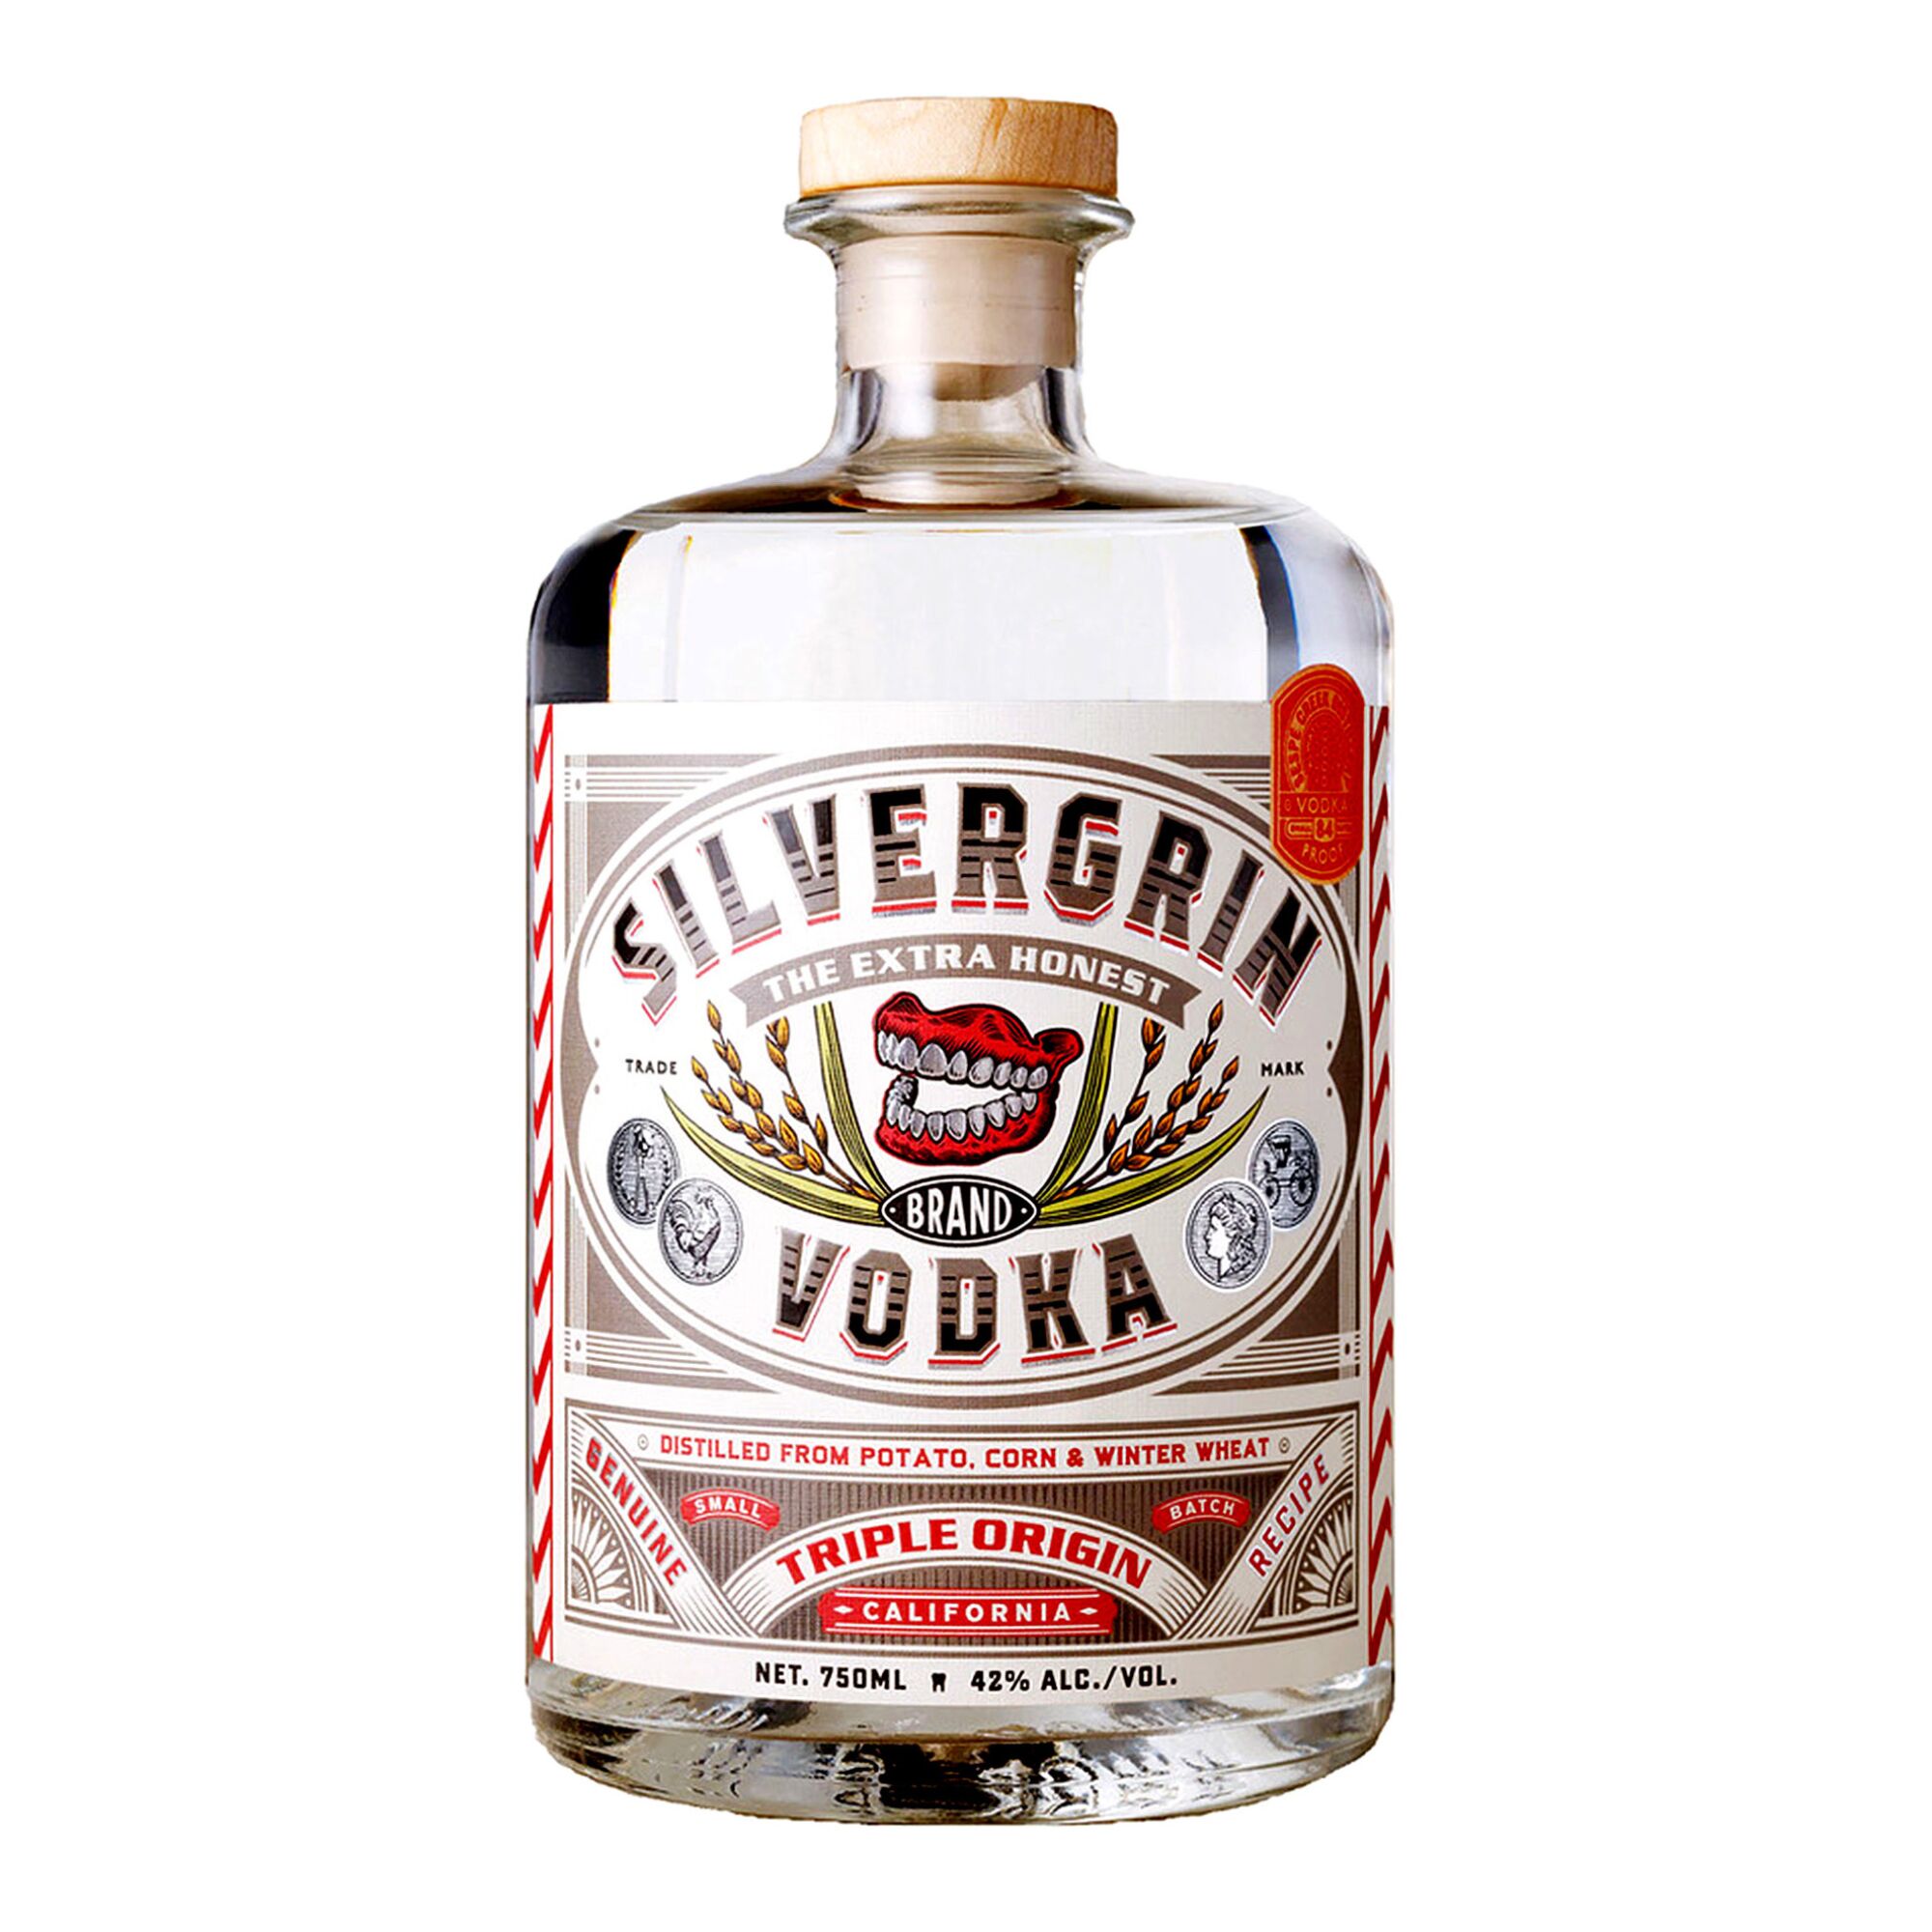 A bottle of Silvergrin vodka.